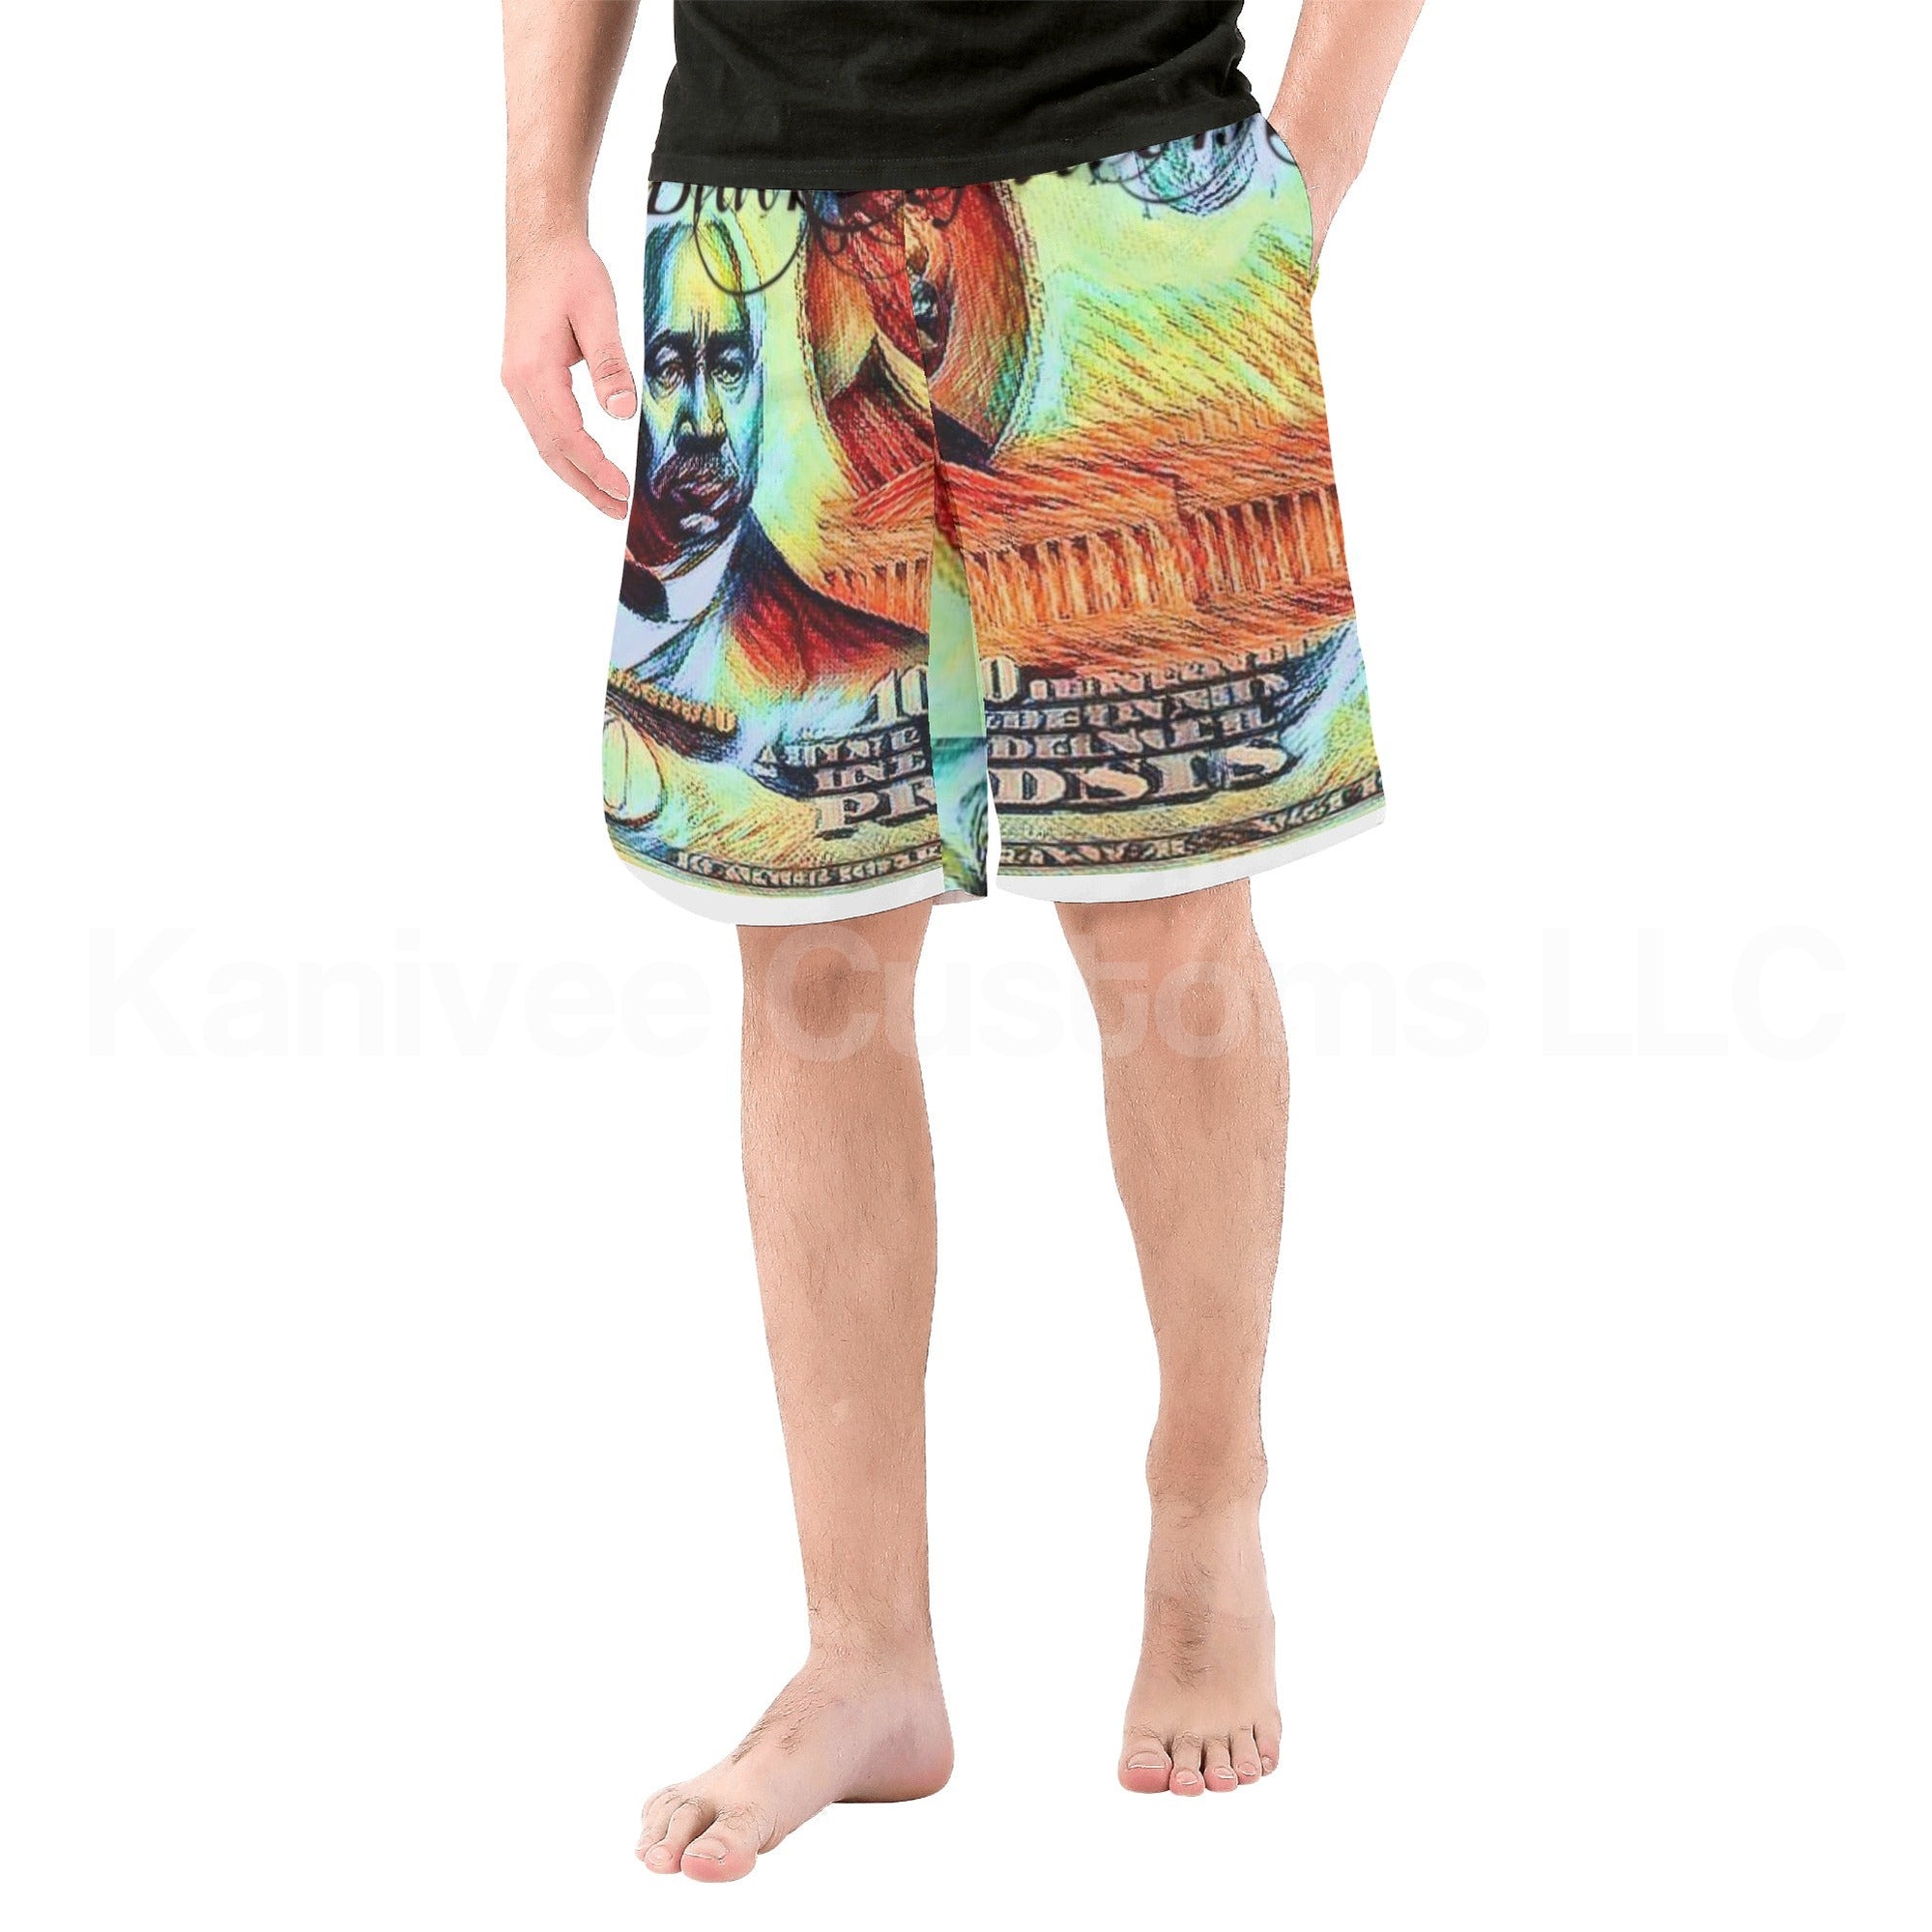 BlackMoney Shorts - Kanivee Customs